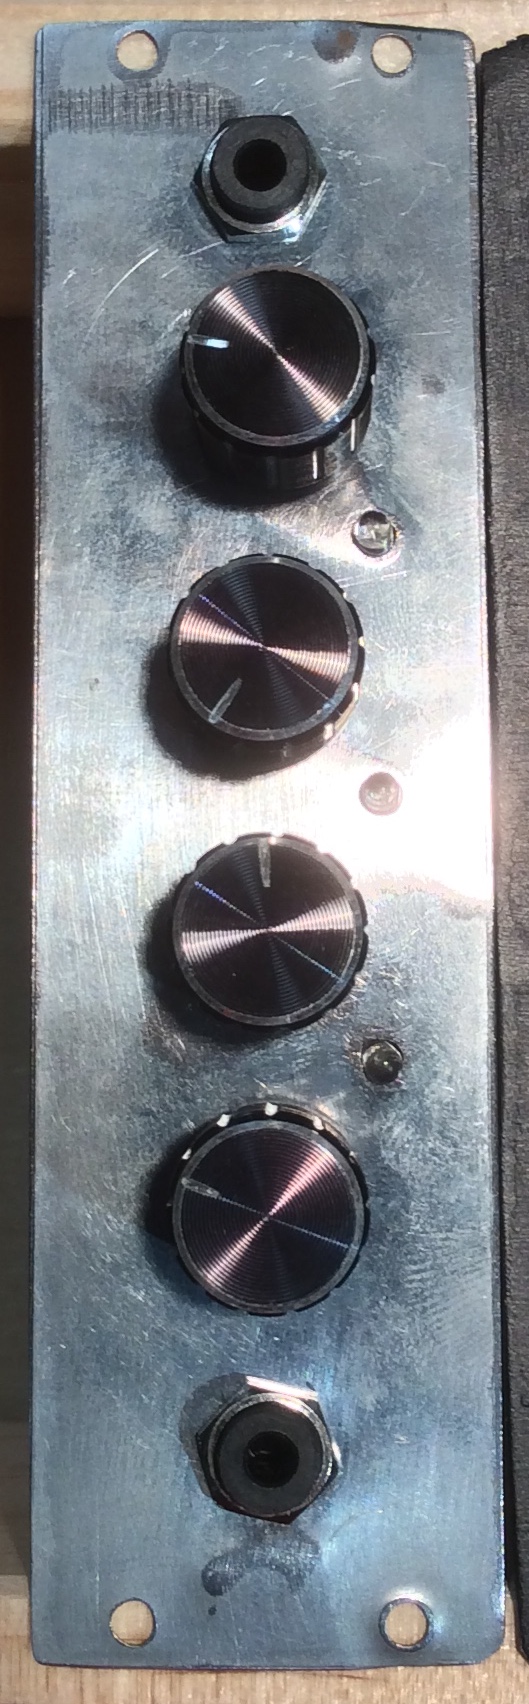 Front panel of a Triple Oscillator module